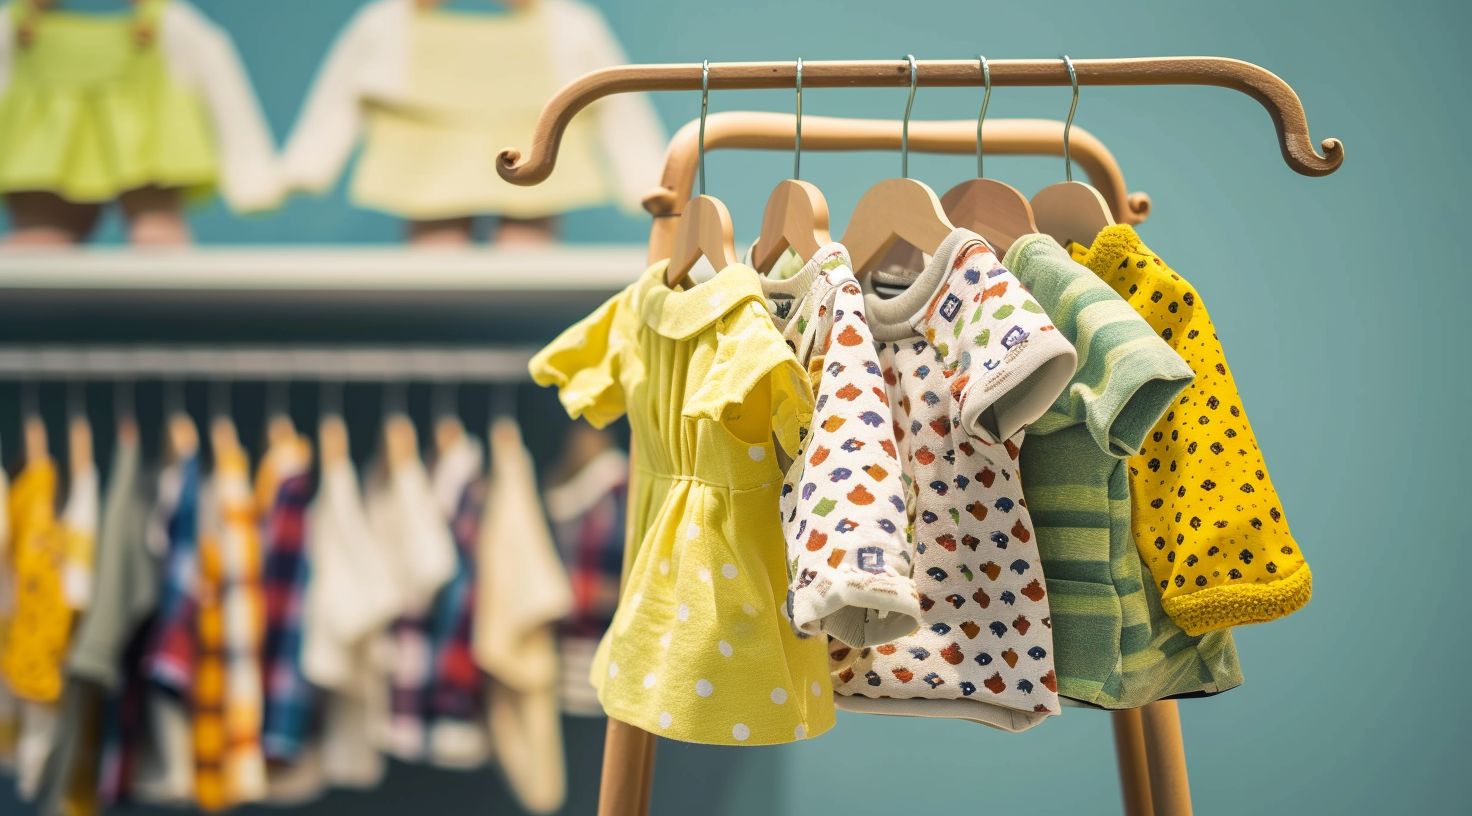 adorable newborn clothes on rack